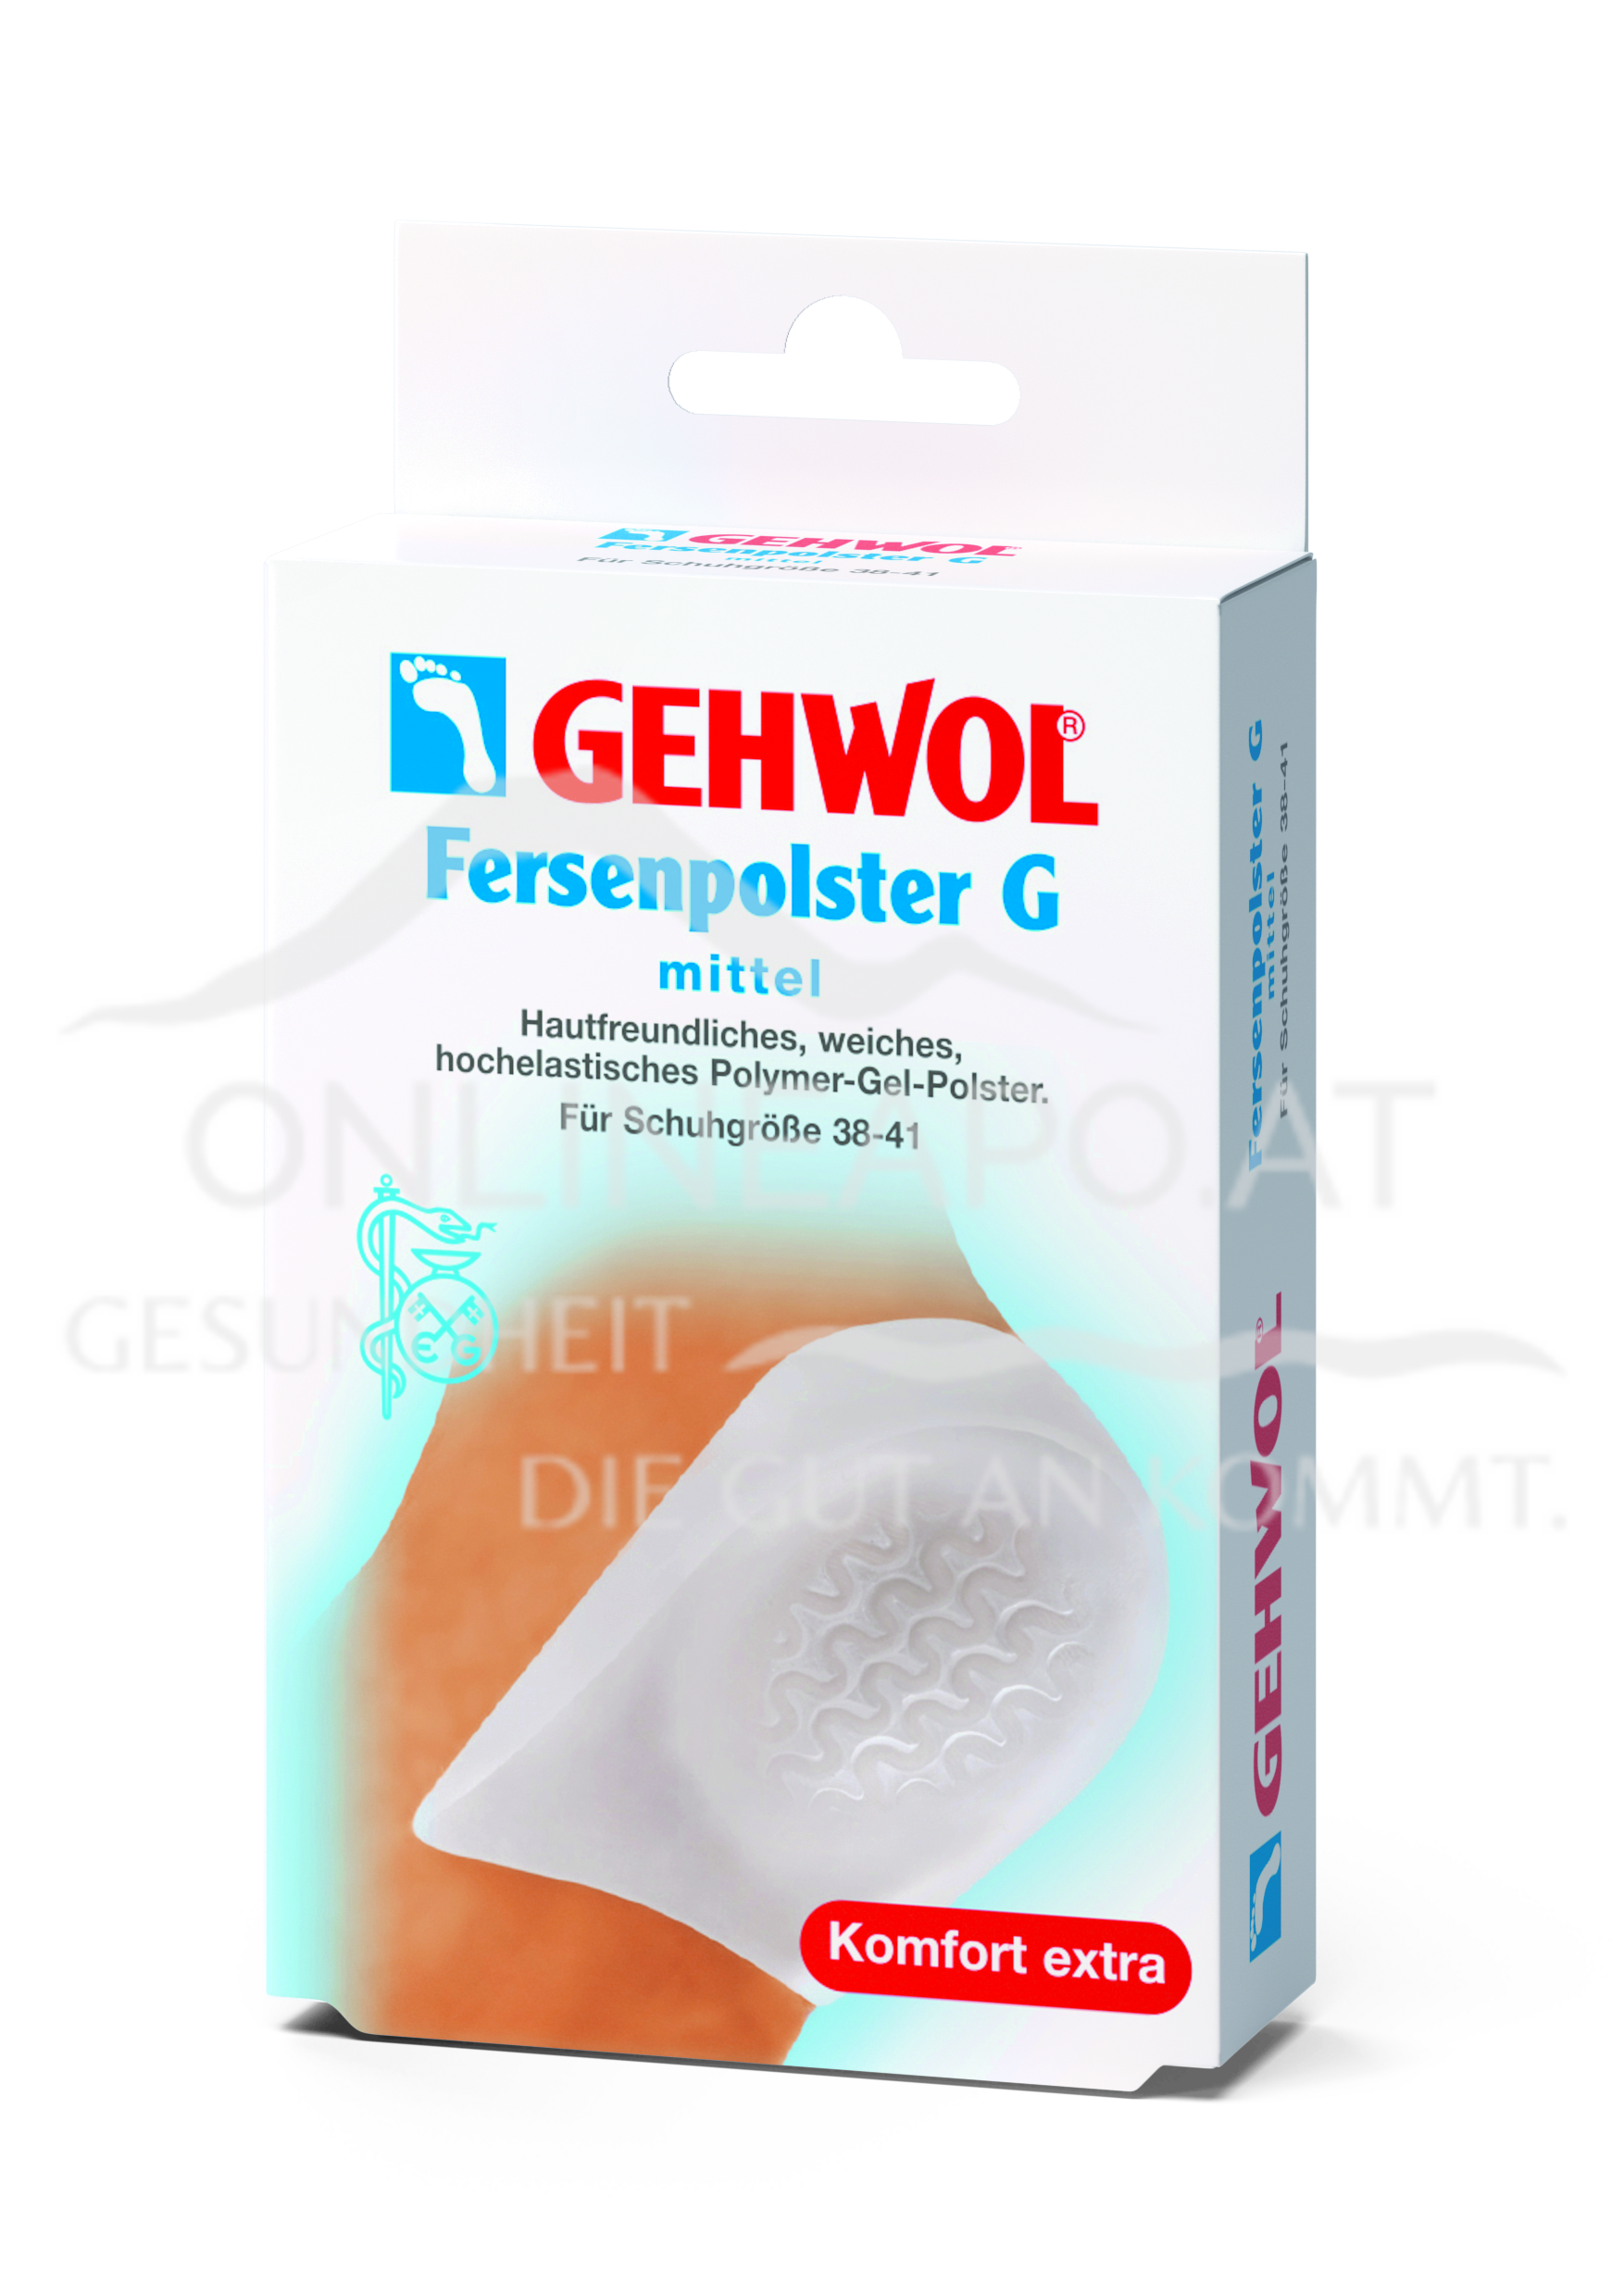 GEHWOL® Fersenpolster G mittel